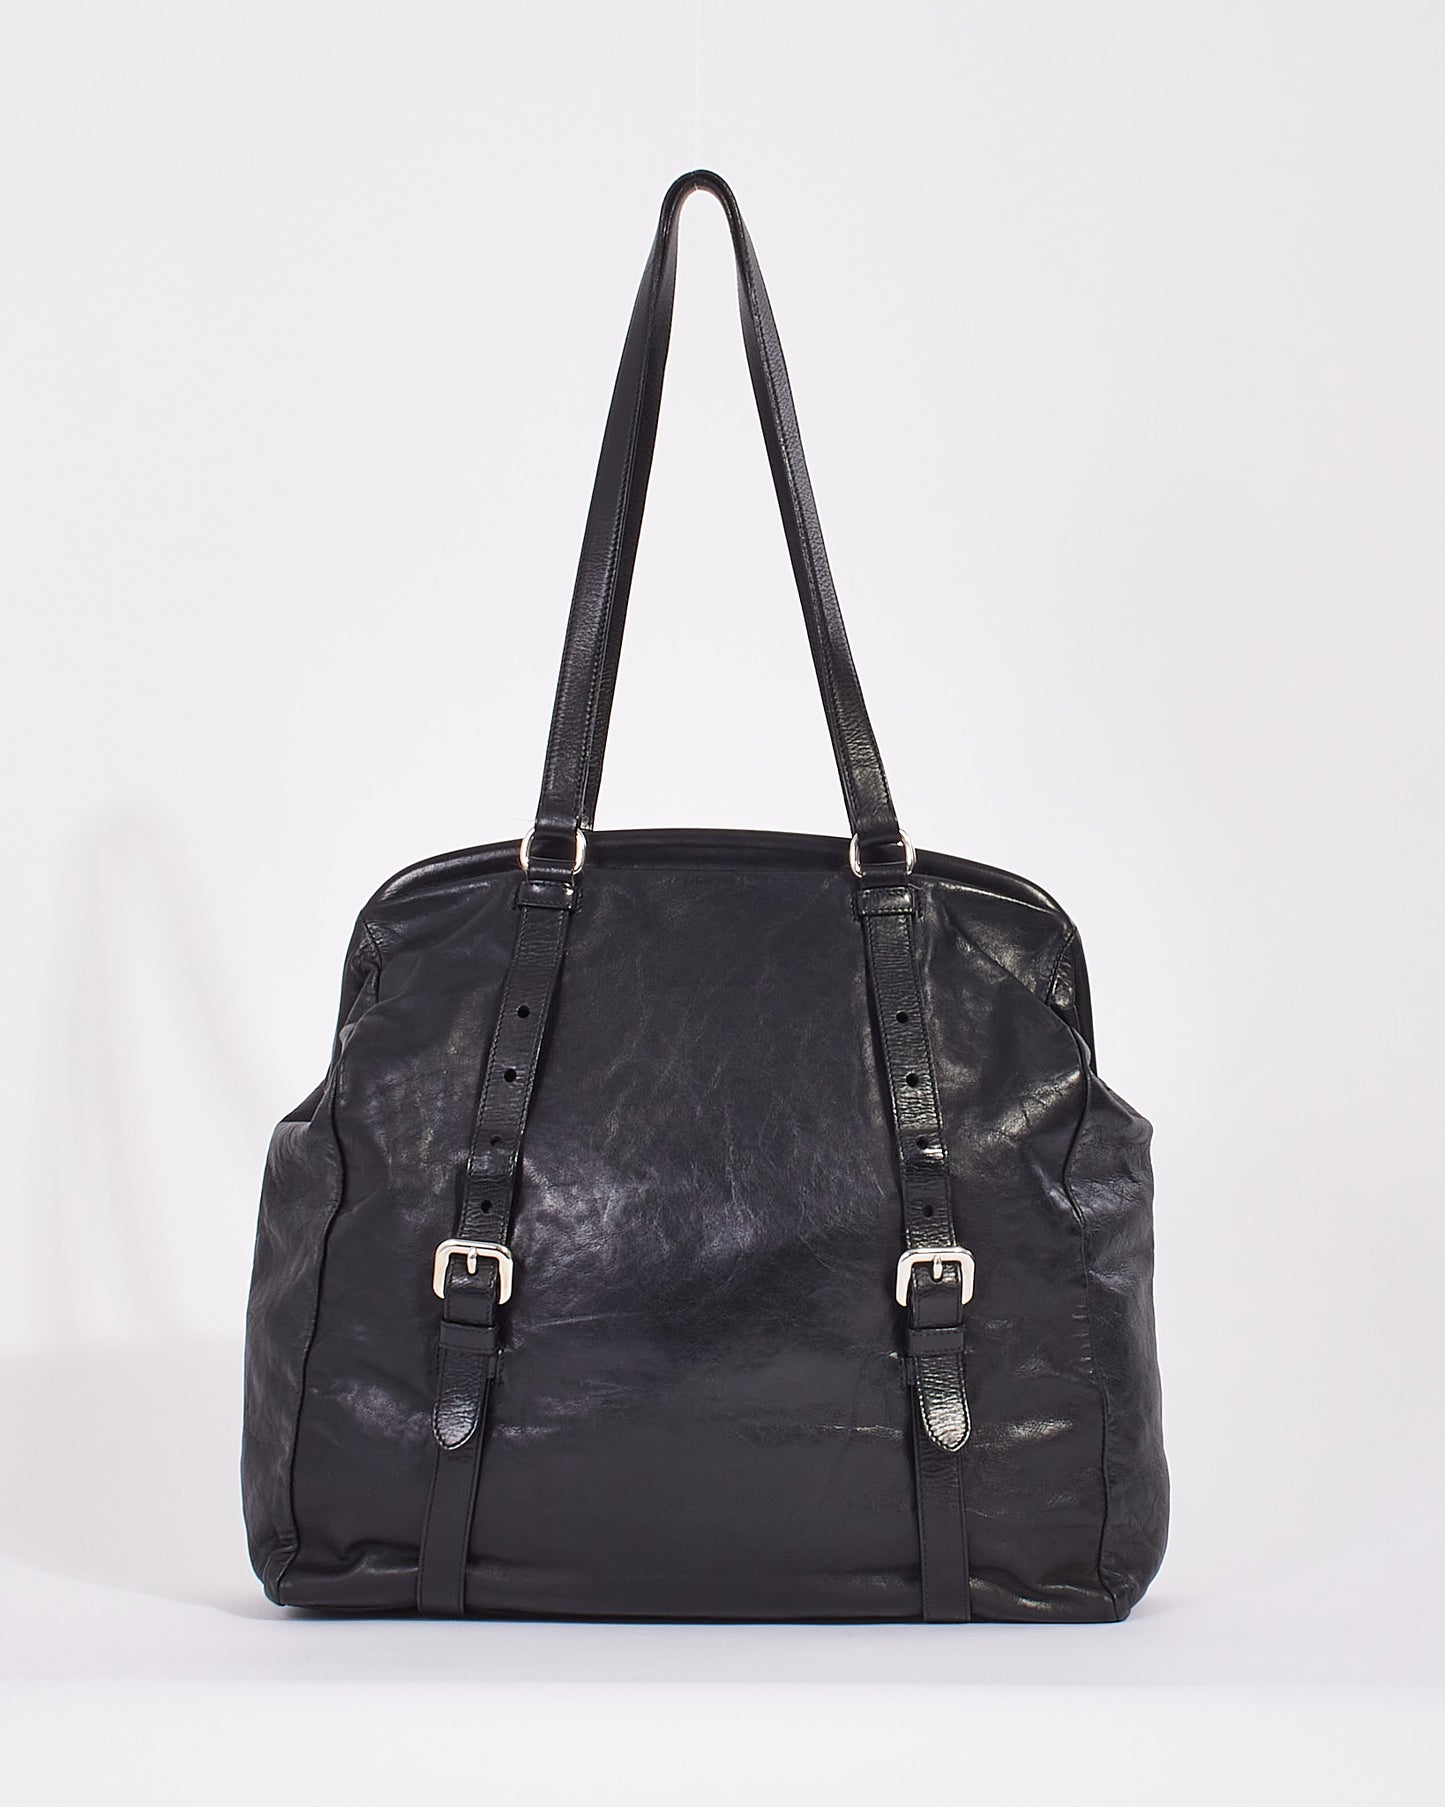 Prada Black Leather Large Doctor Bag